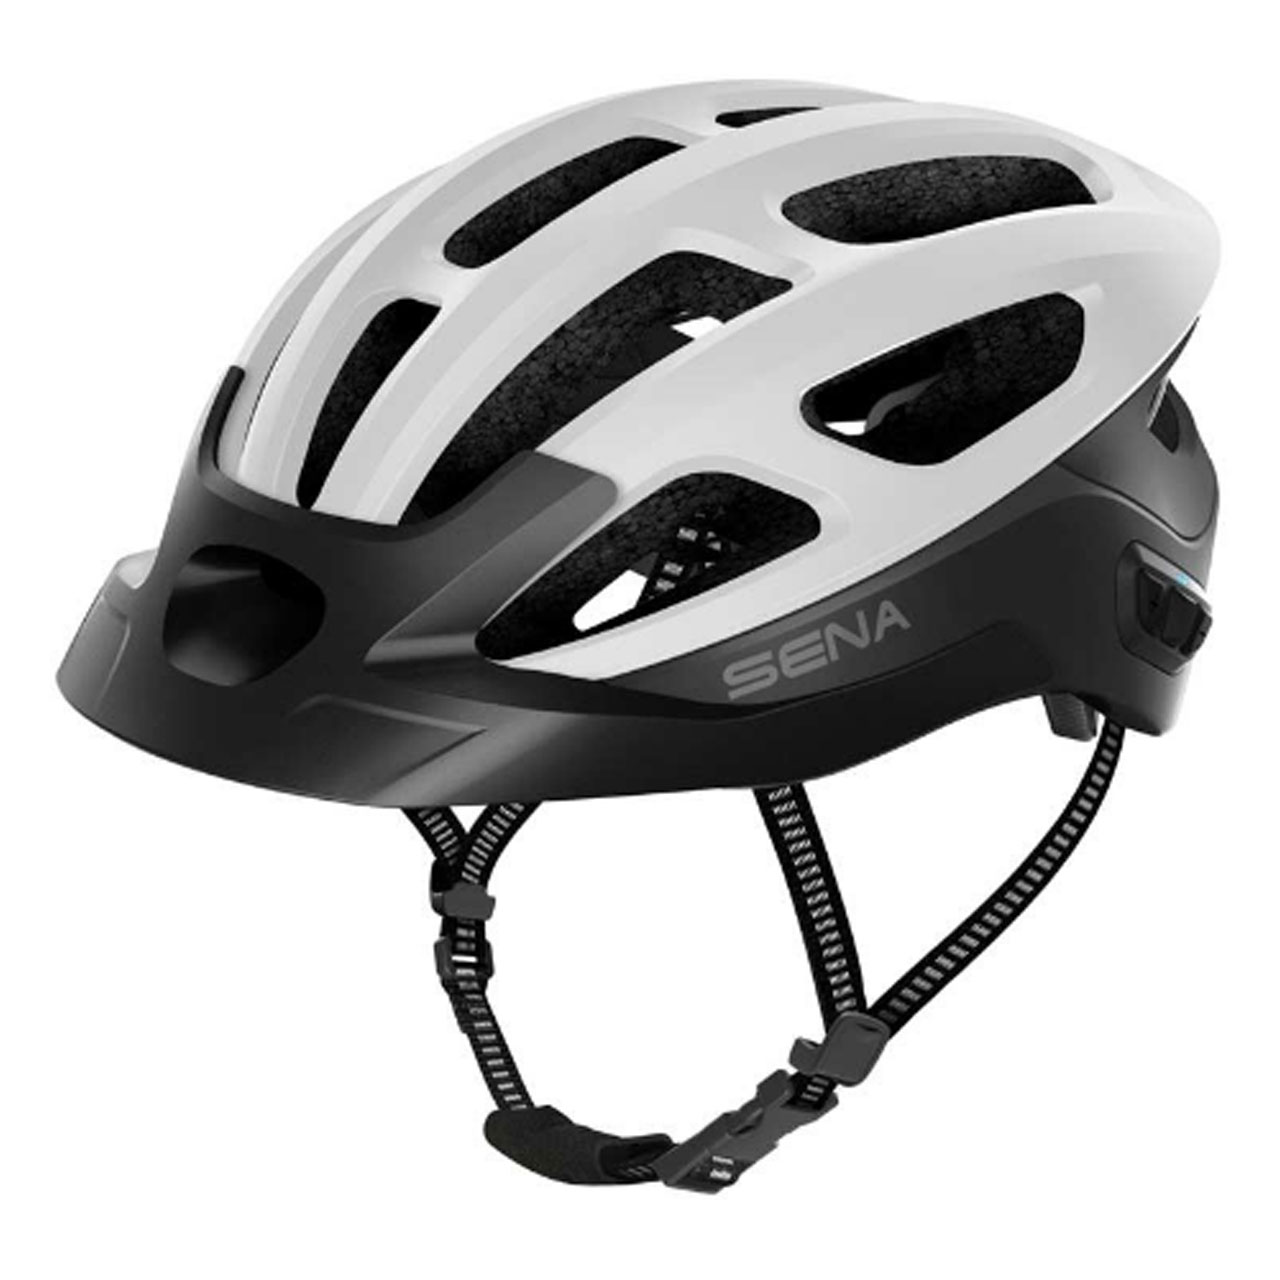 Fahrradhelm Sena Smart Cycling Helmet R1 EVO Größe M